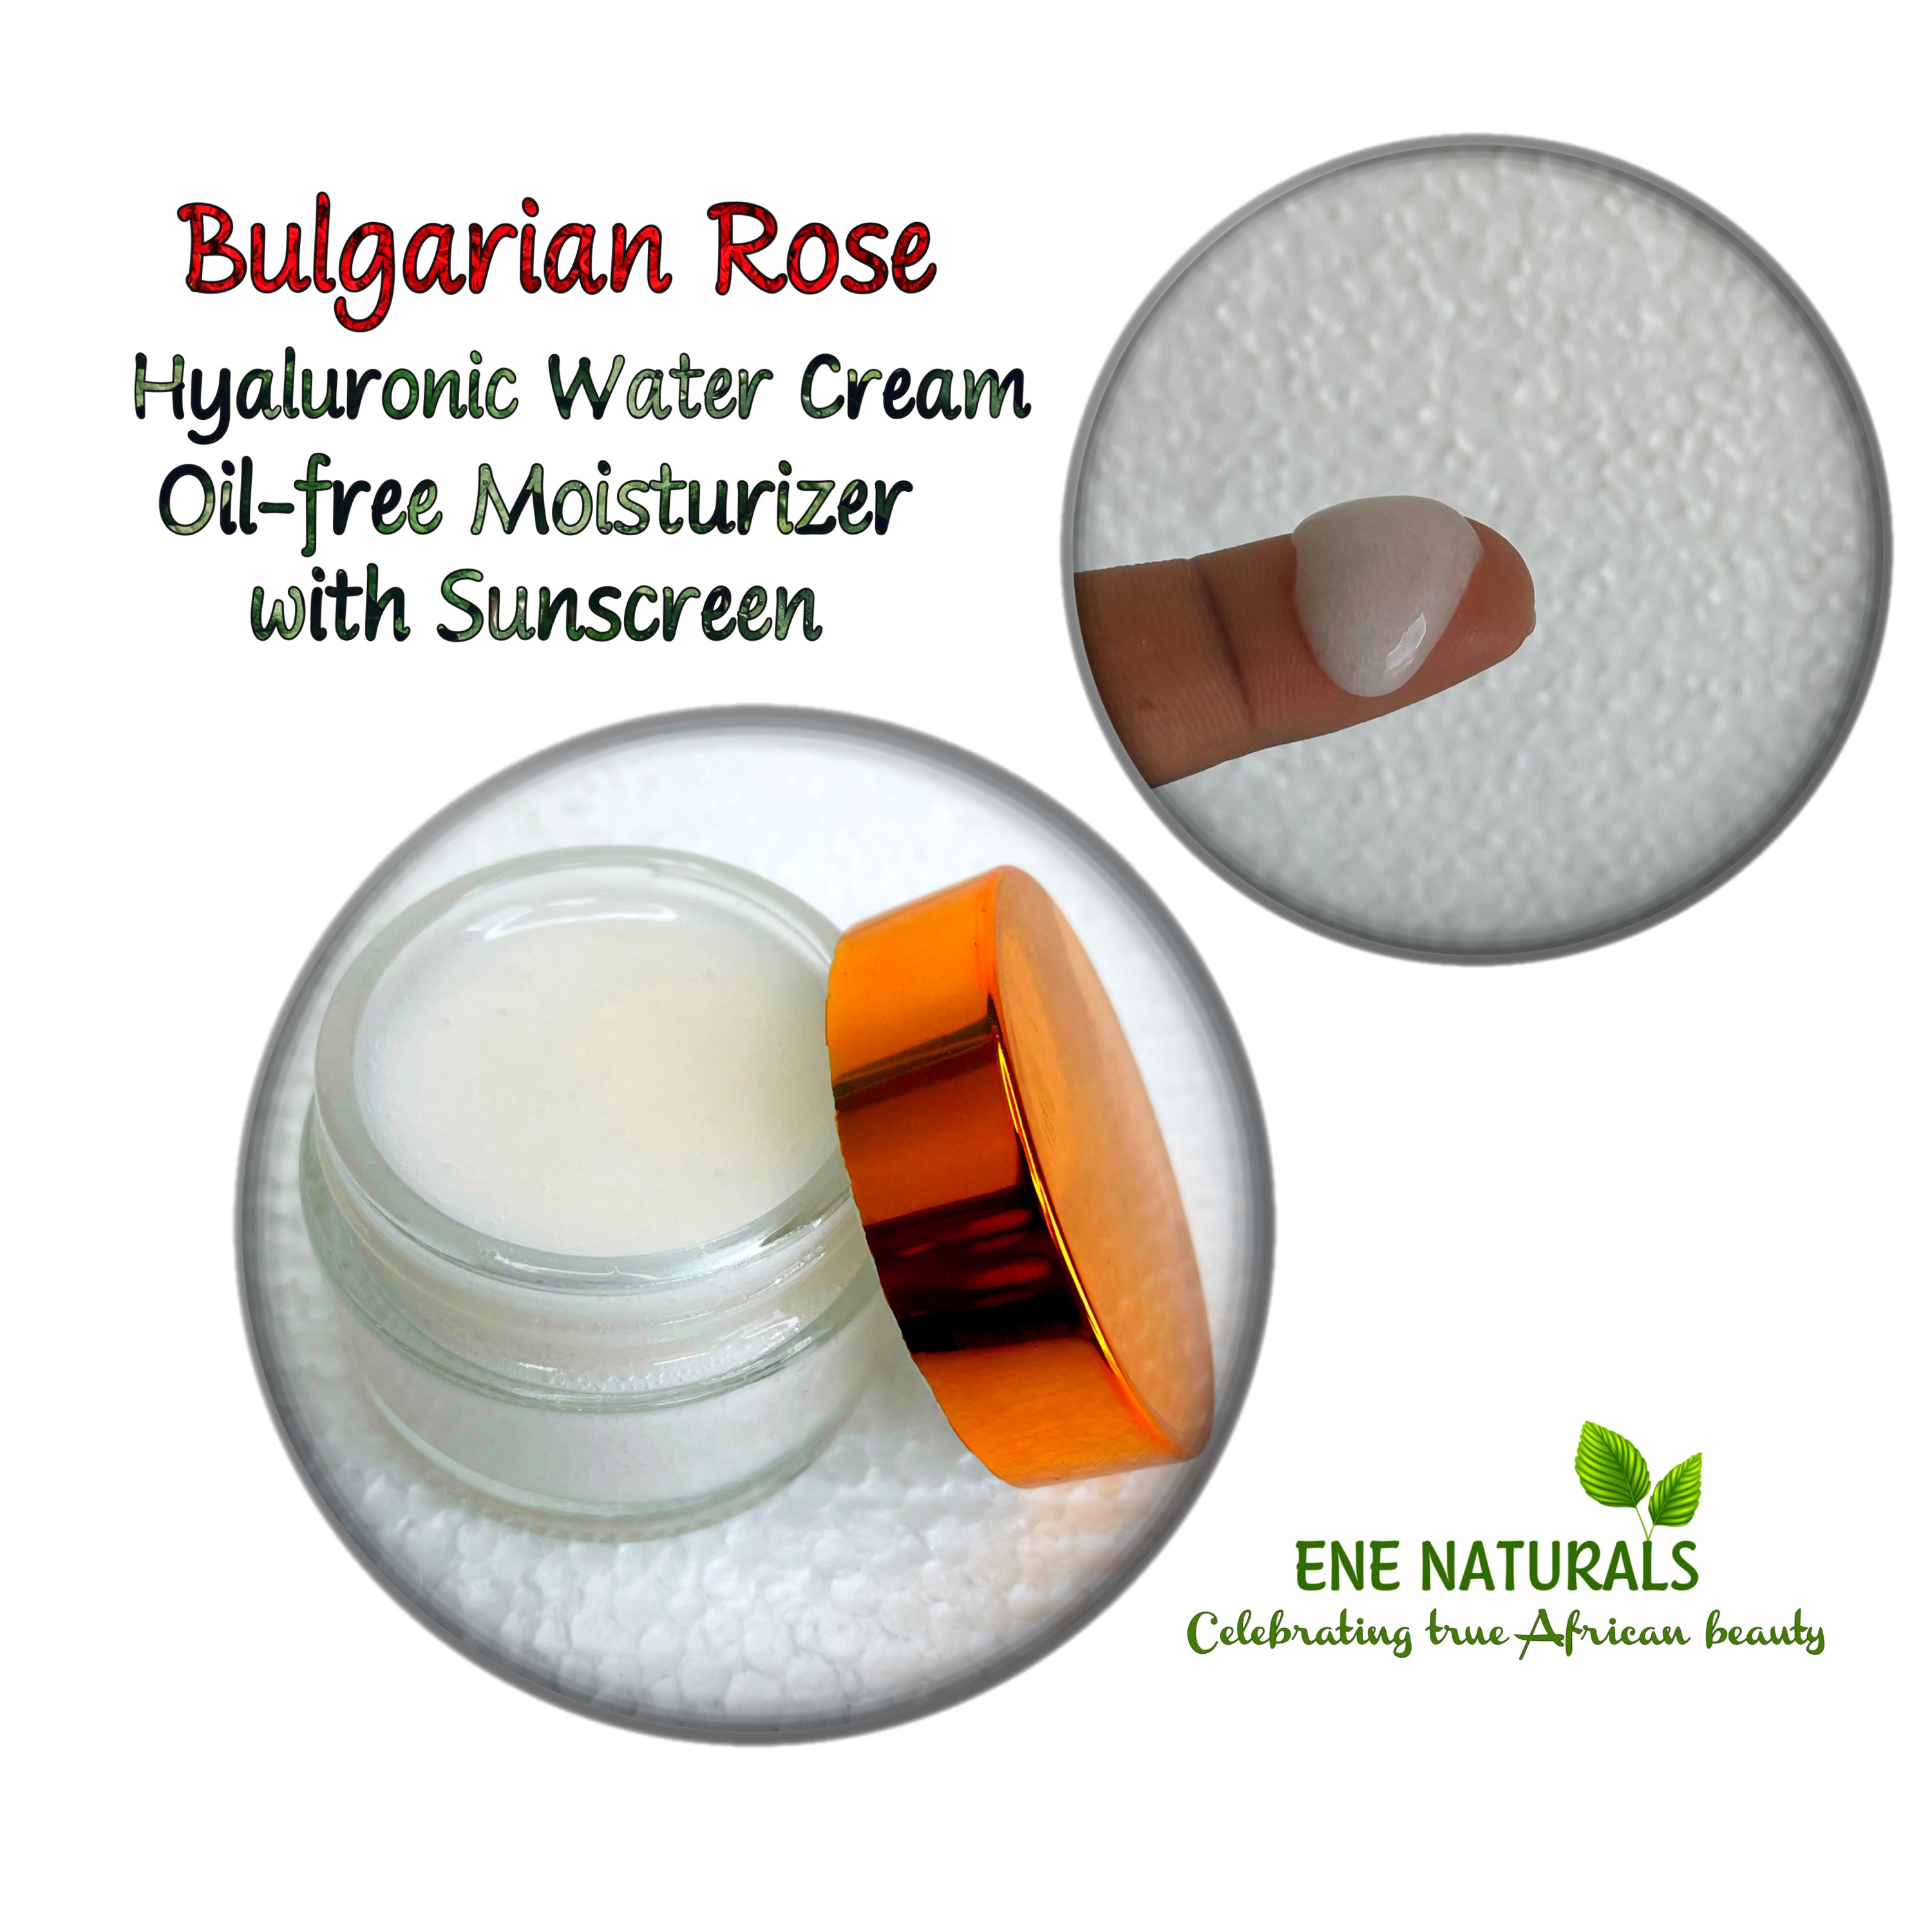 New product alert: Bulgarian Rose Hyaluronic water cream